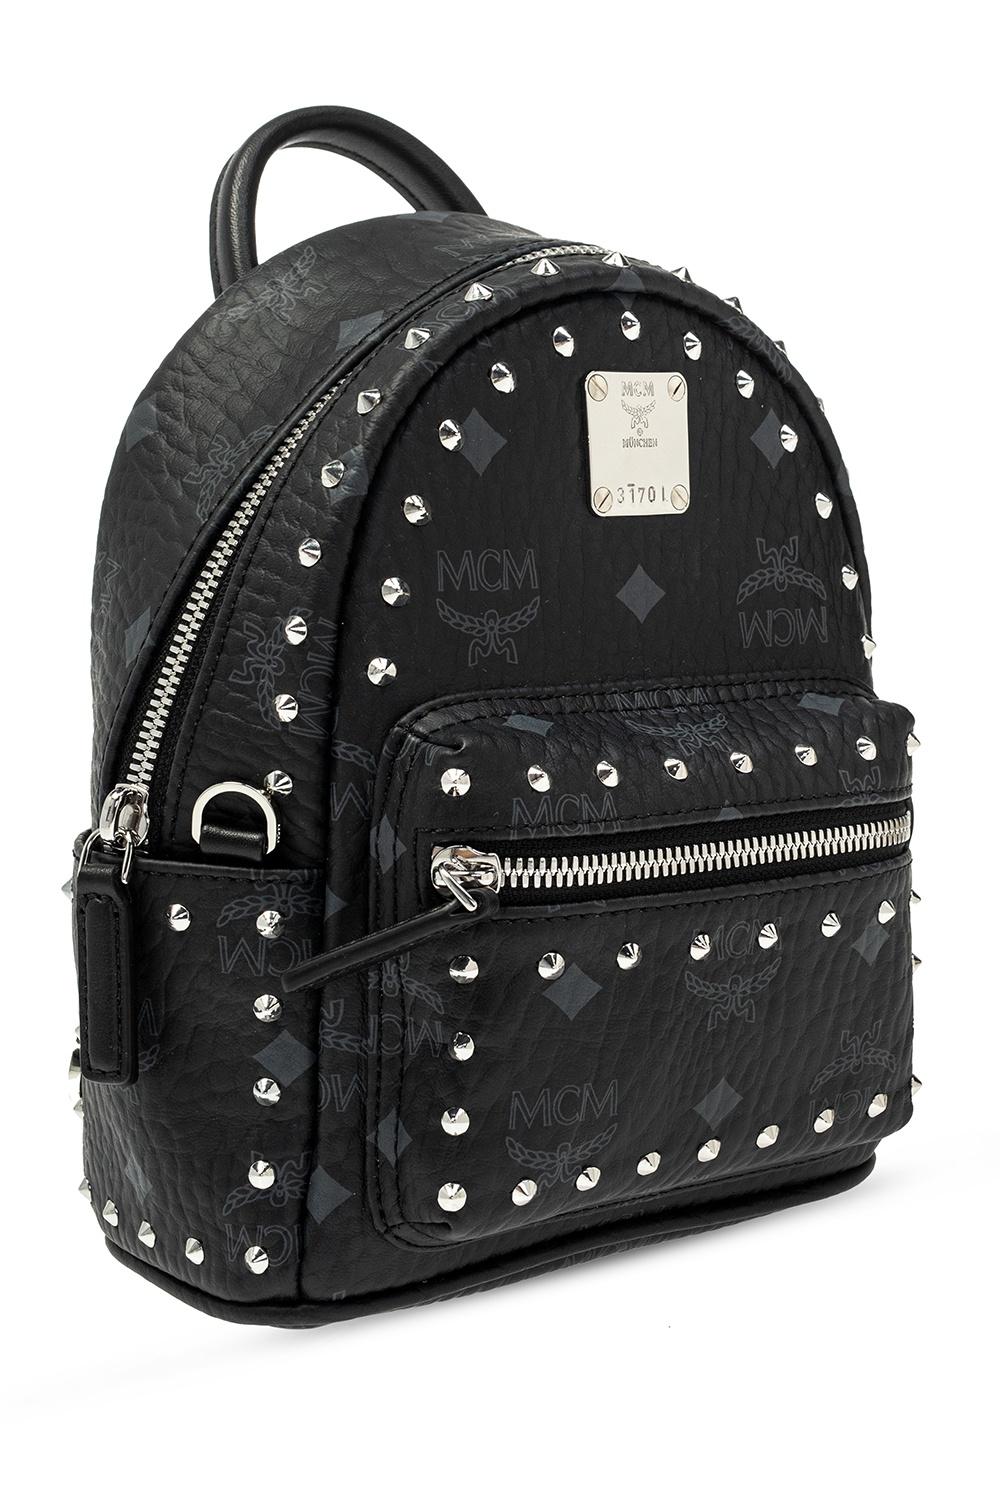 MCM Canvas Patterned Backpack Black - Lyst